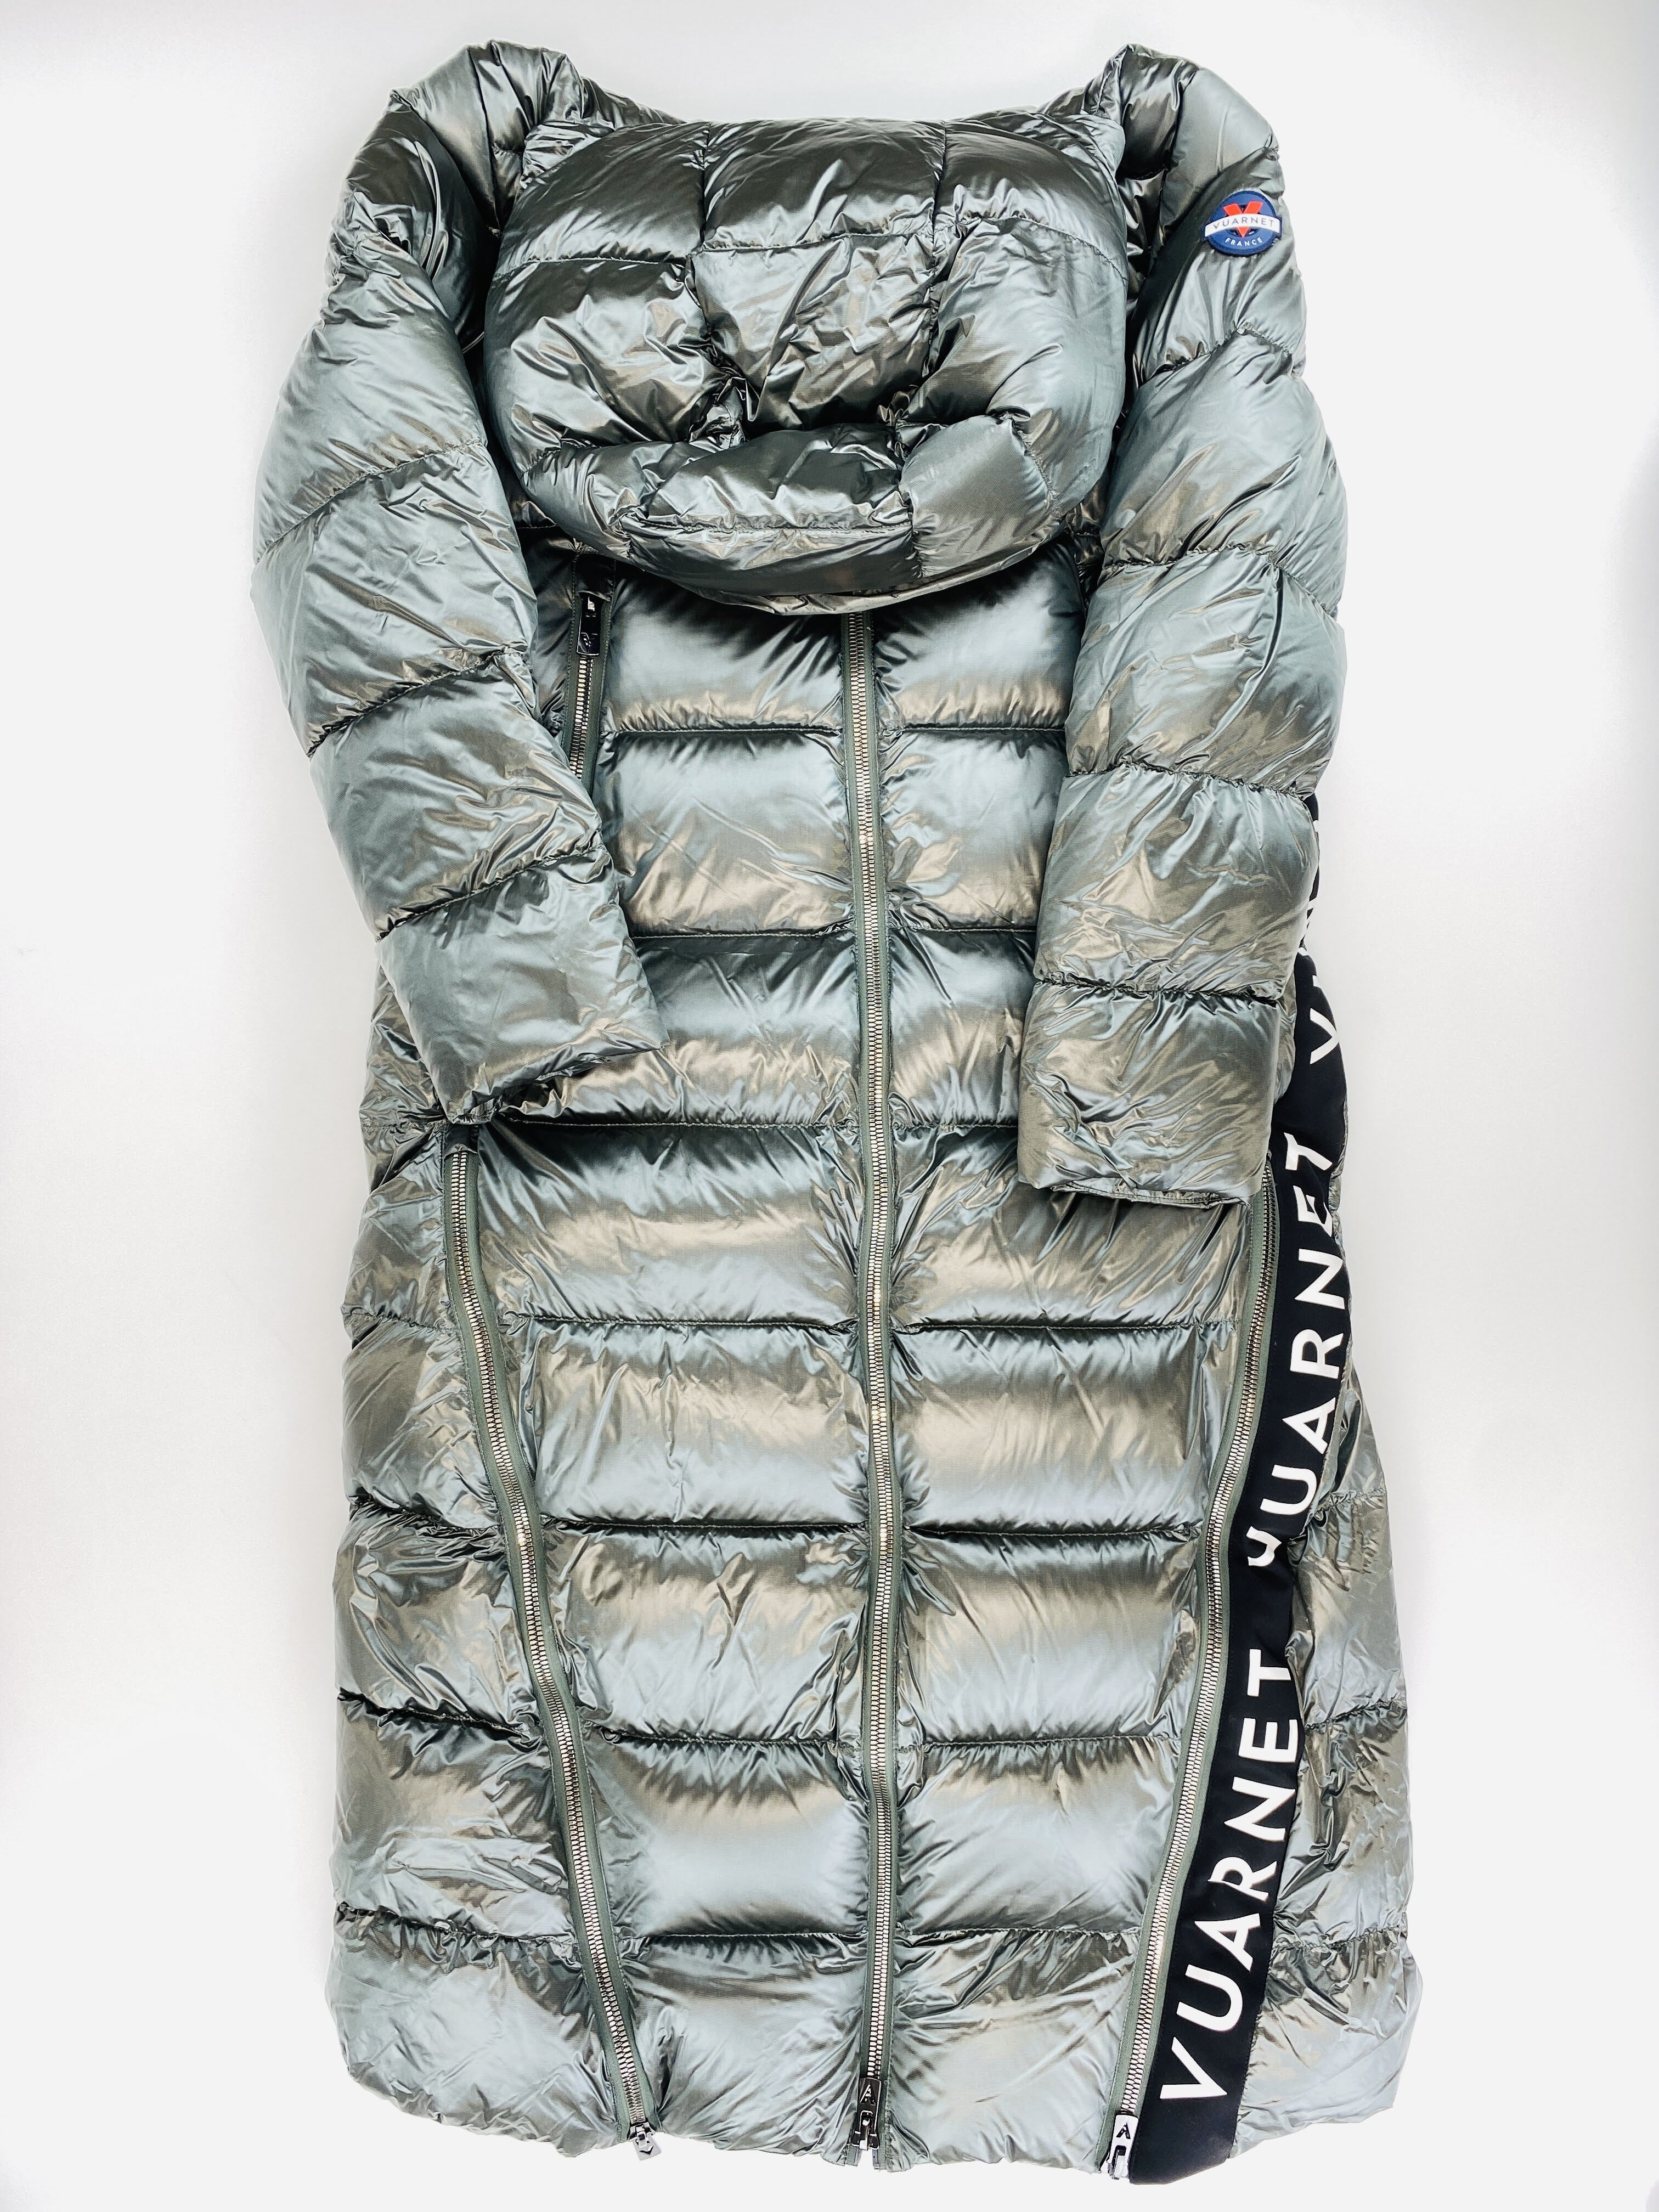 Vuarnet Myra Jacket - Second Hand Synthetic jacket - Women's - Grey - S | Hardloop